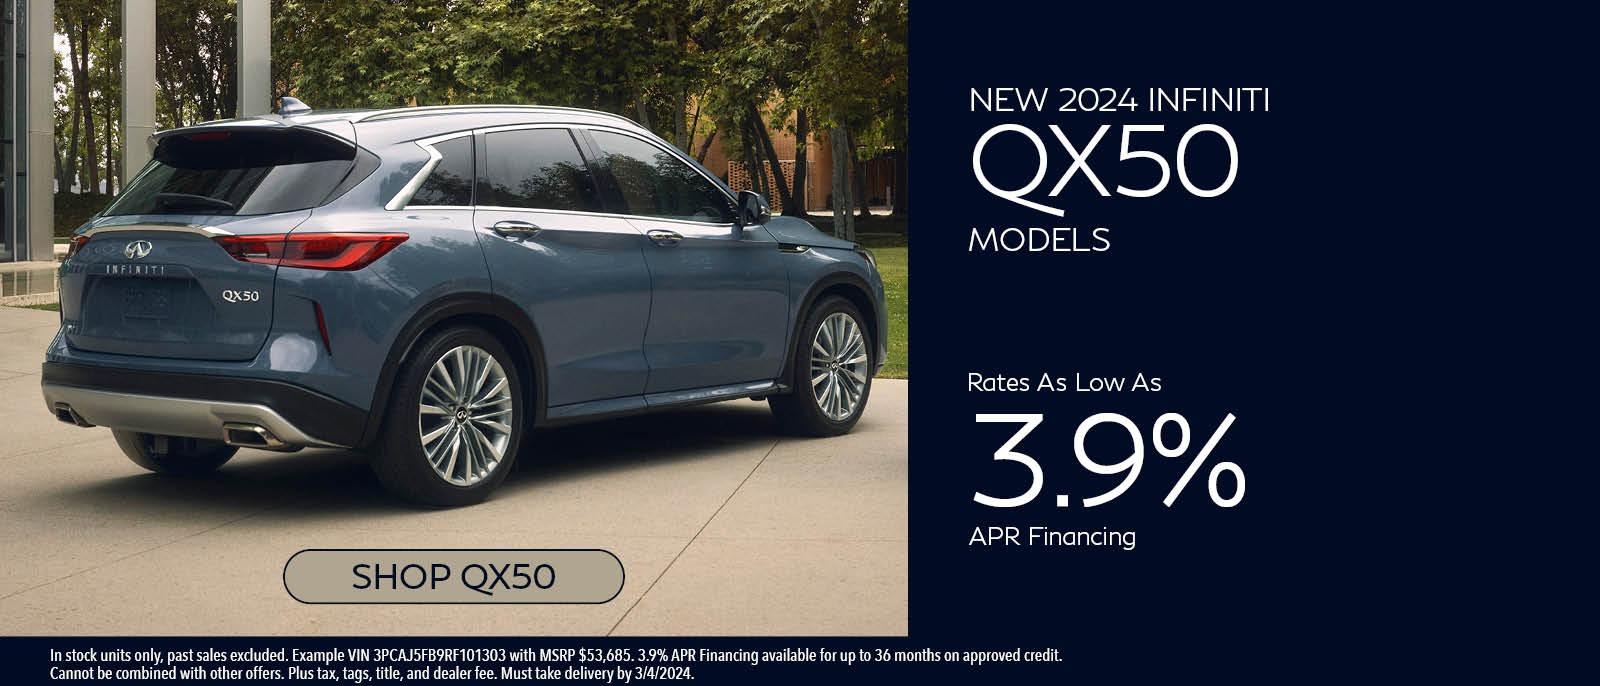 New 2024 INFINITI QX50 Models